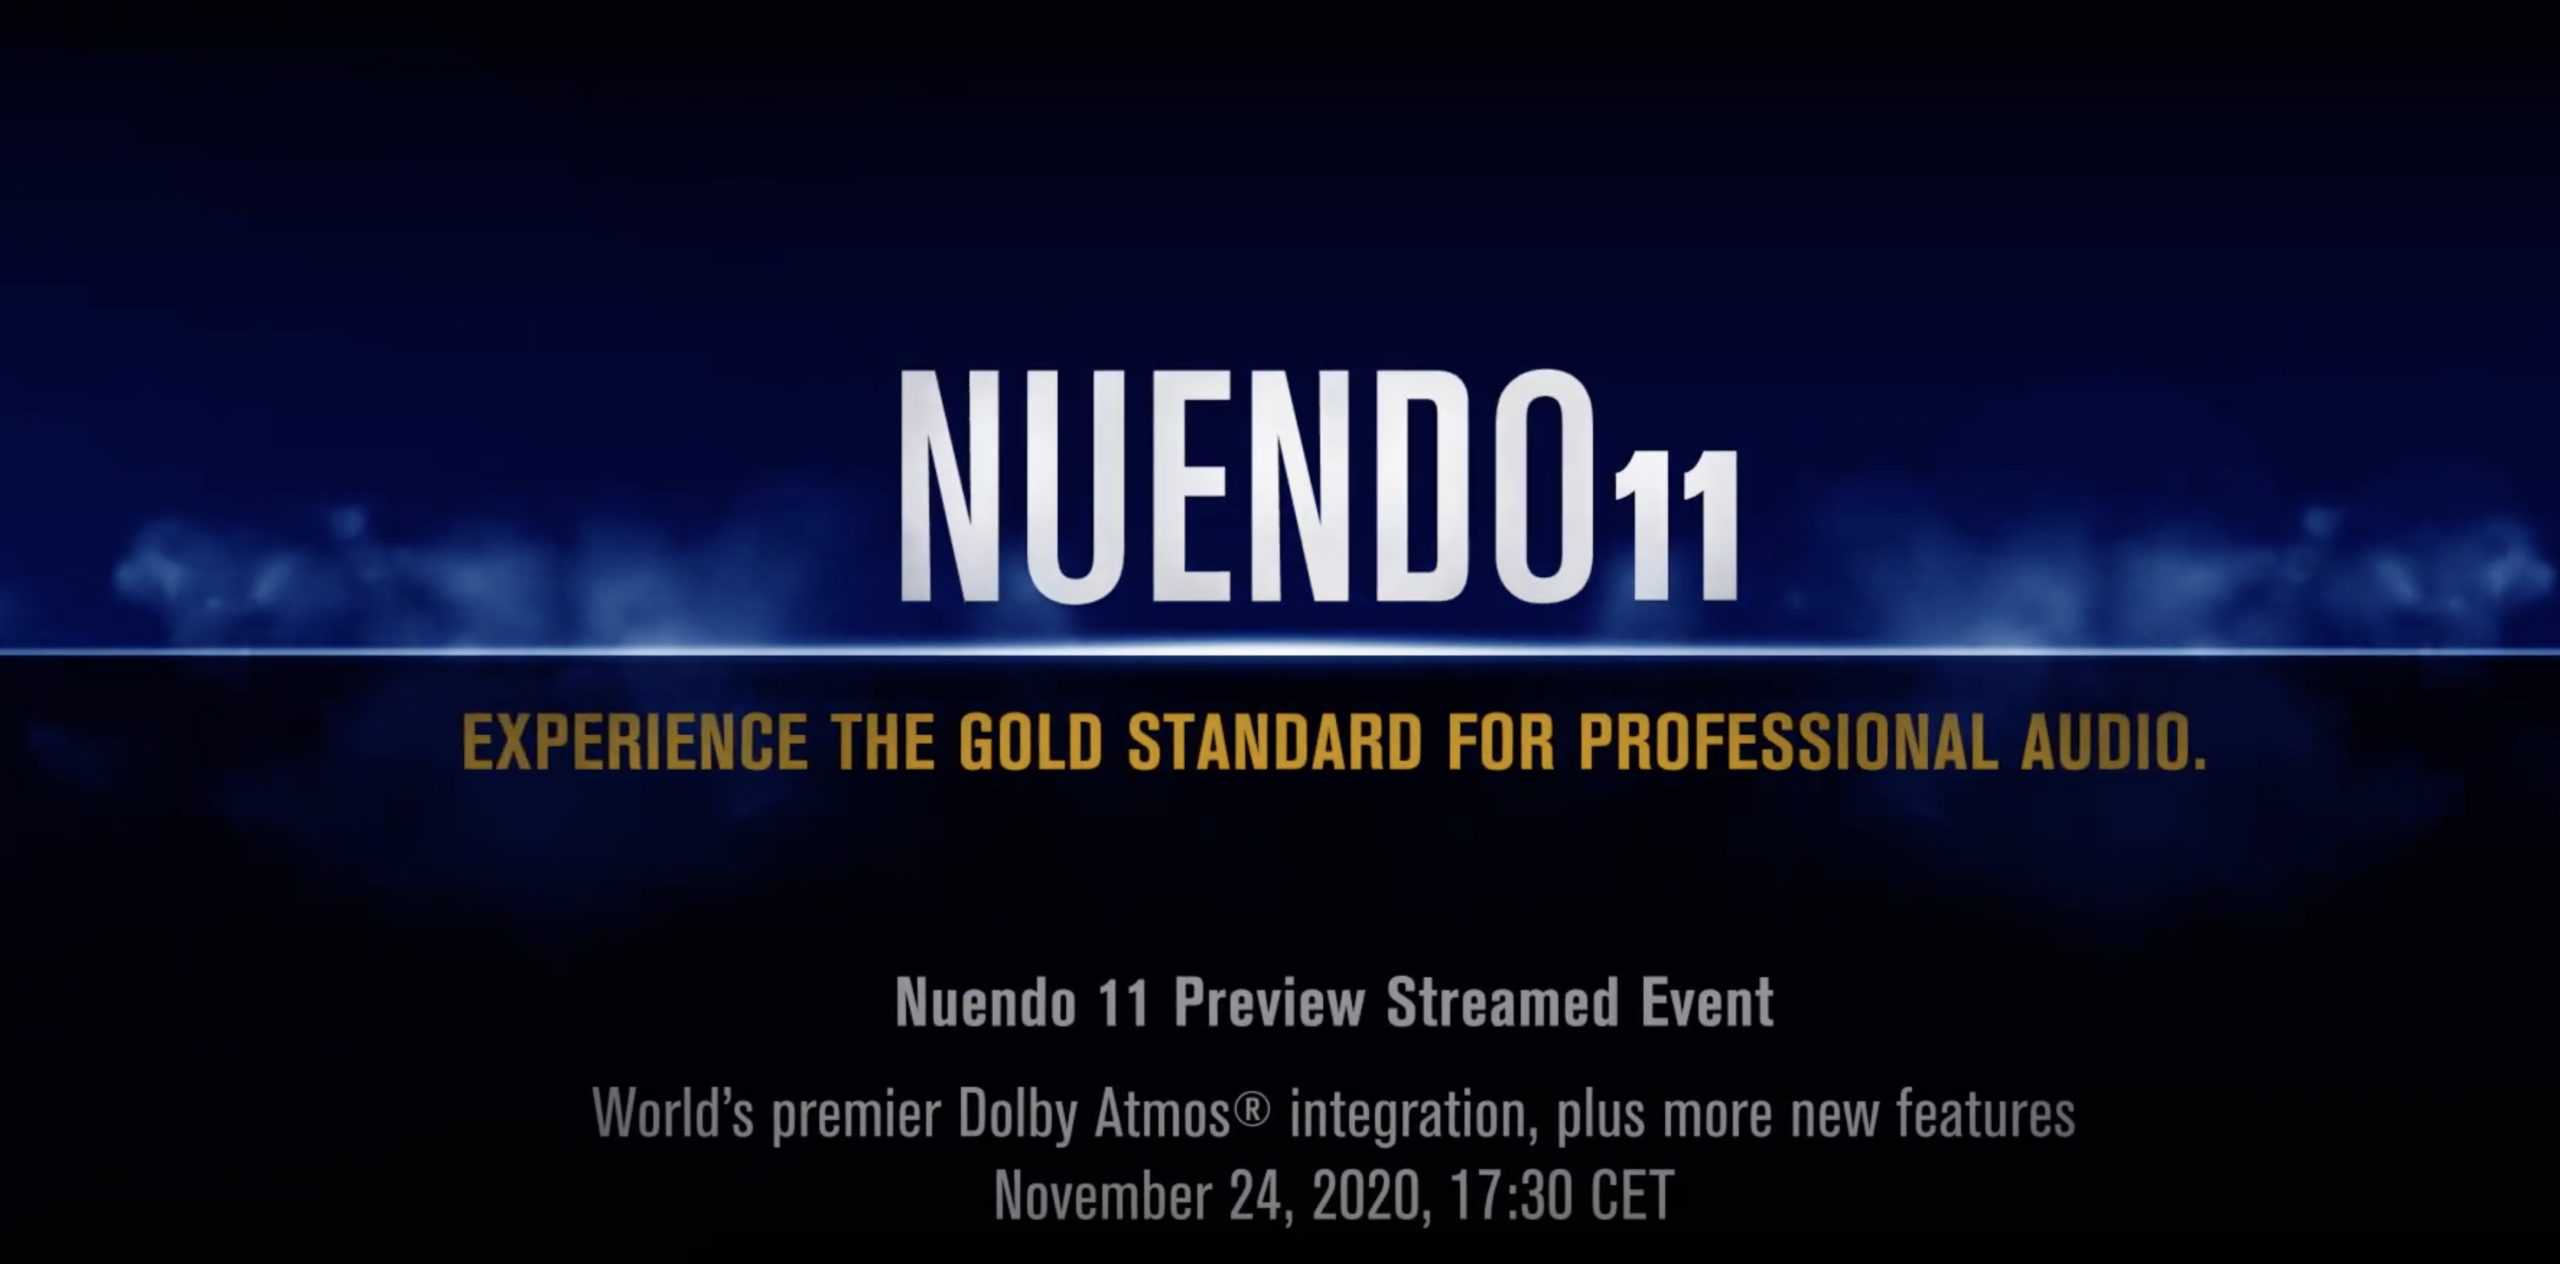 Upcoming Exklusive Nuendo 11 Demo scaled